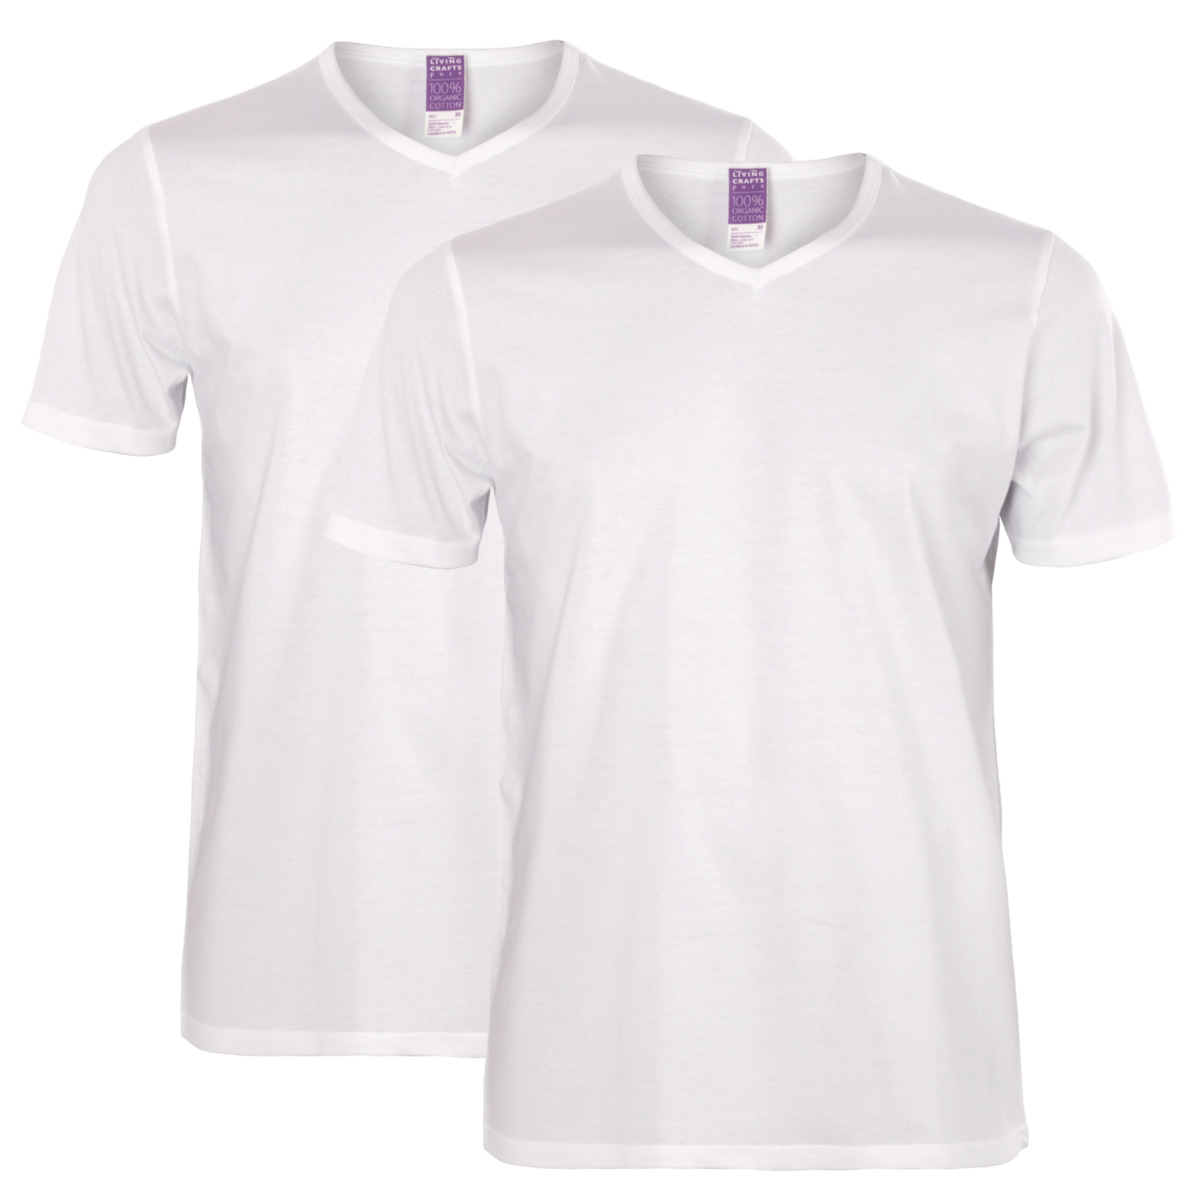 Blanc T-shirt, lot de 2, DEAN